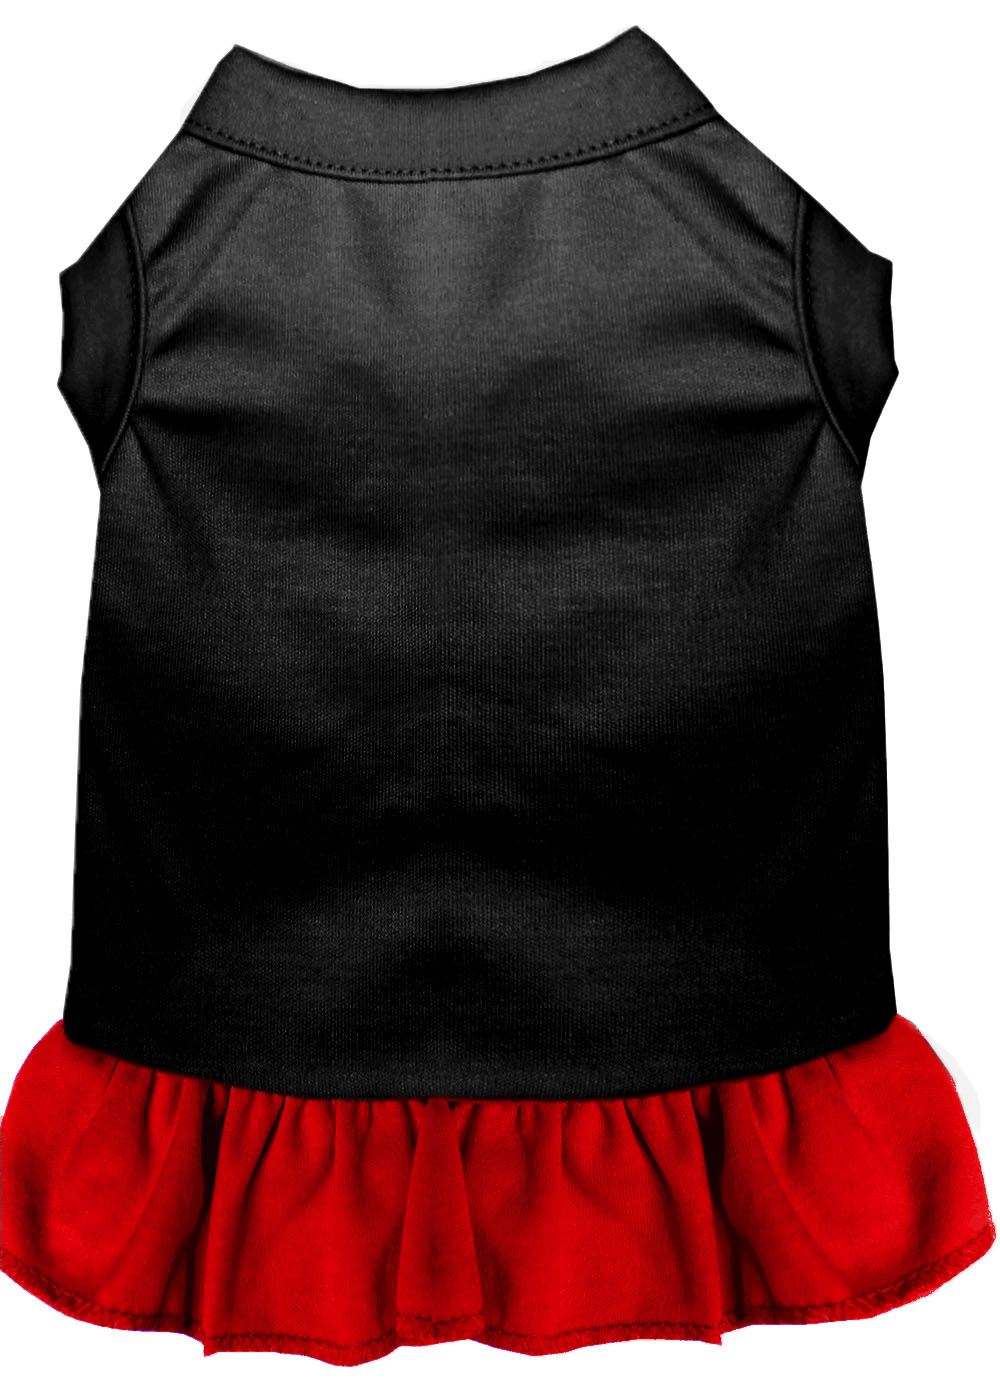 Plain Pet Dress Black with Red XL